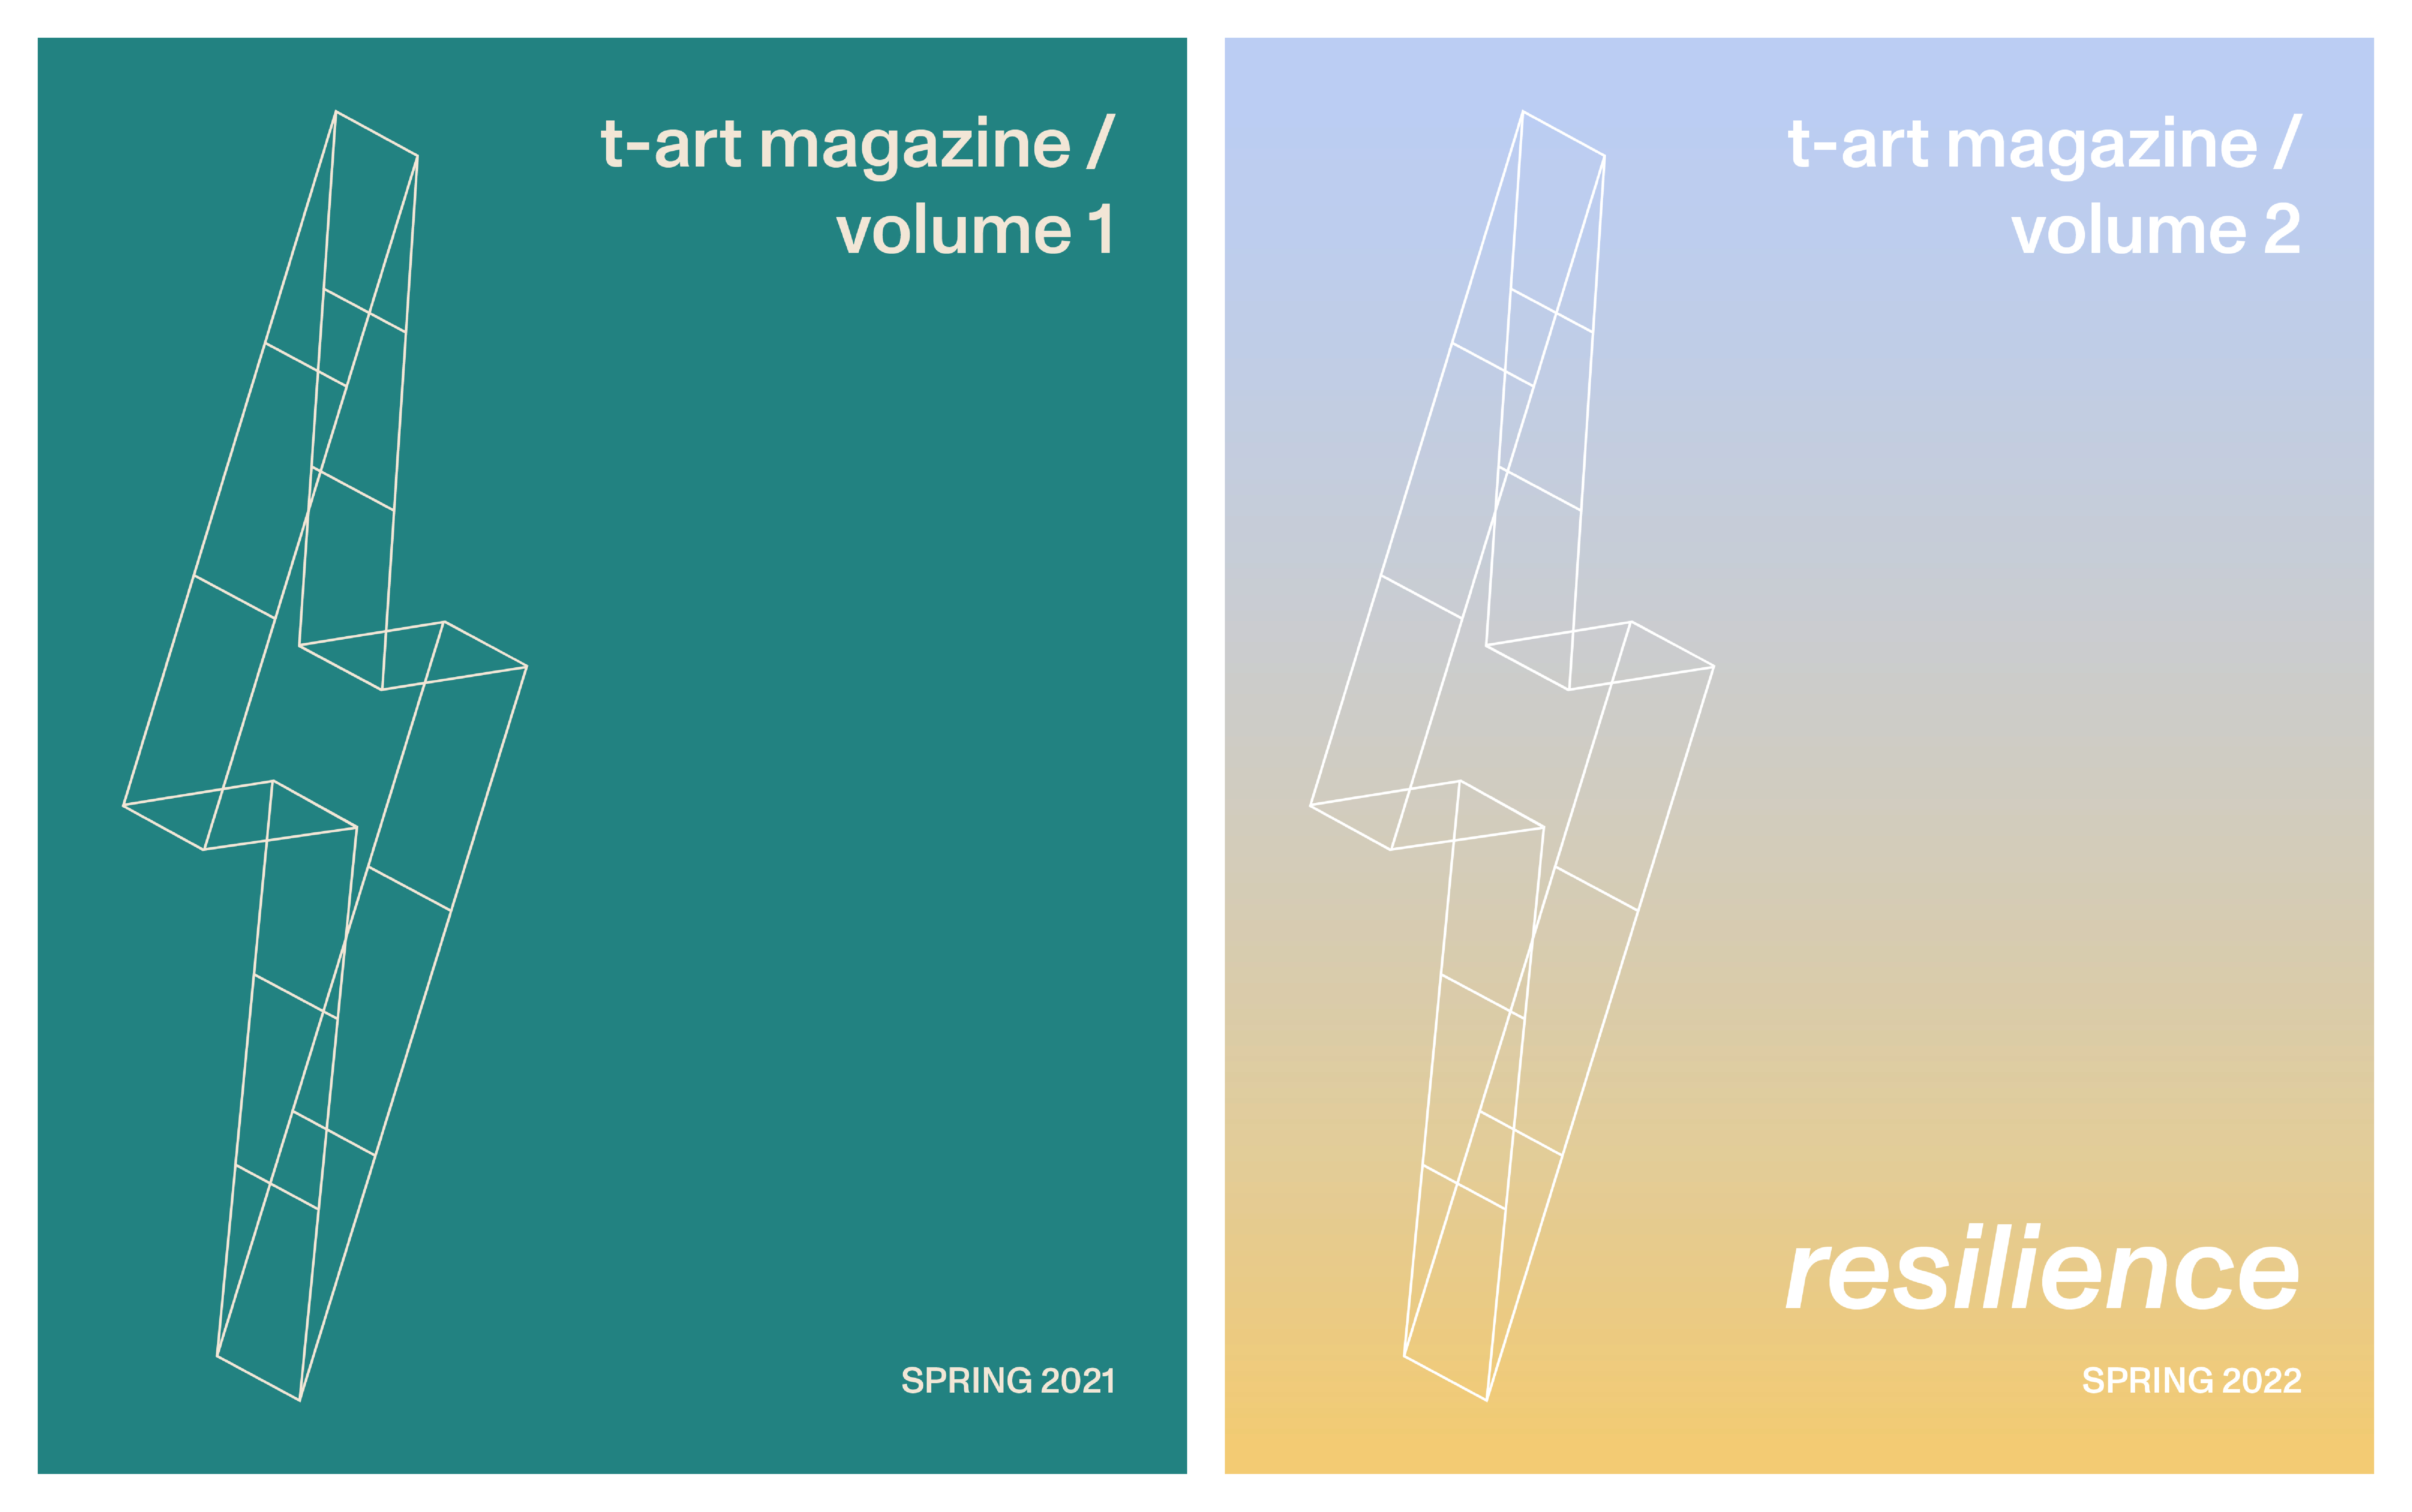 t-art magazine volume 1 spring 2021 and t-art magazine volume 2 resilience 2022  